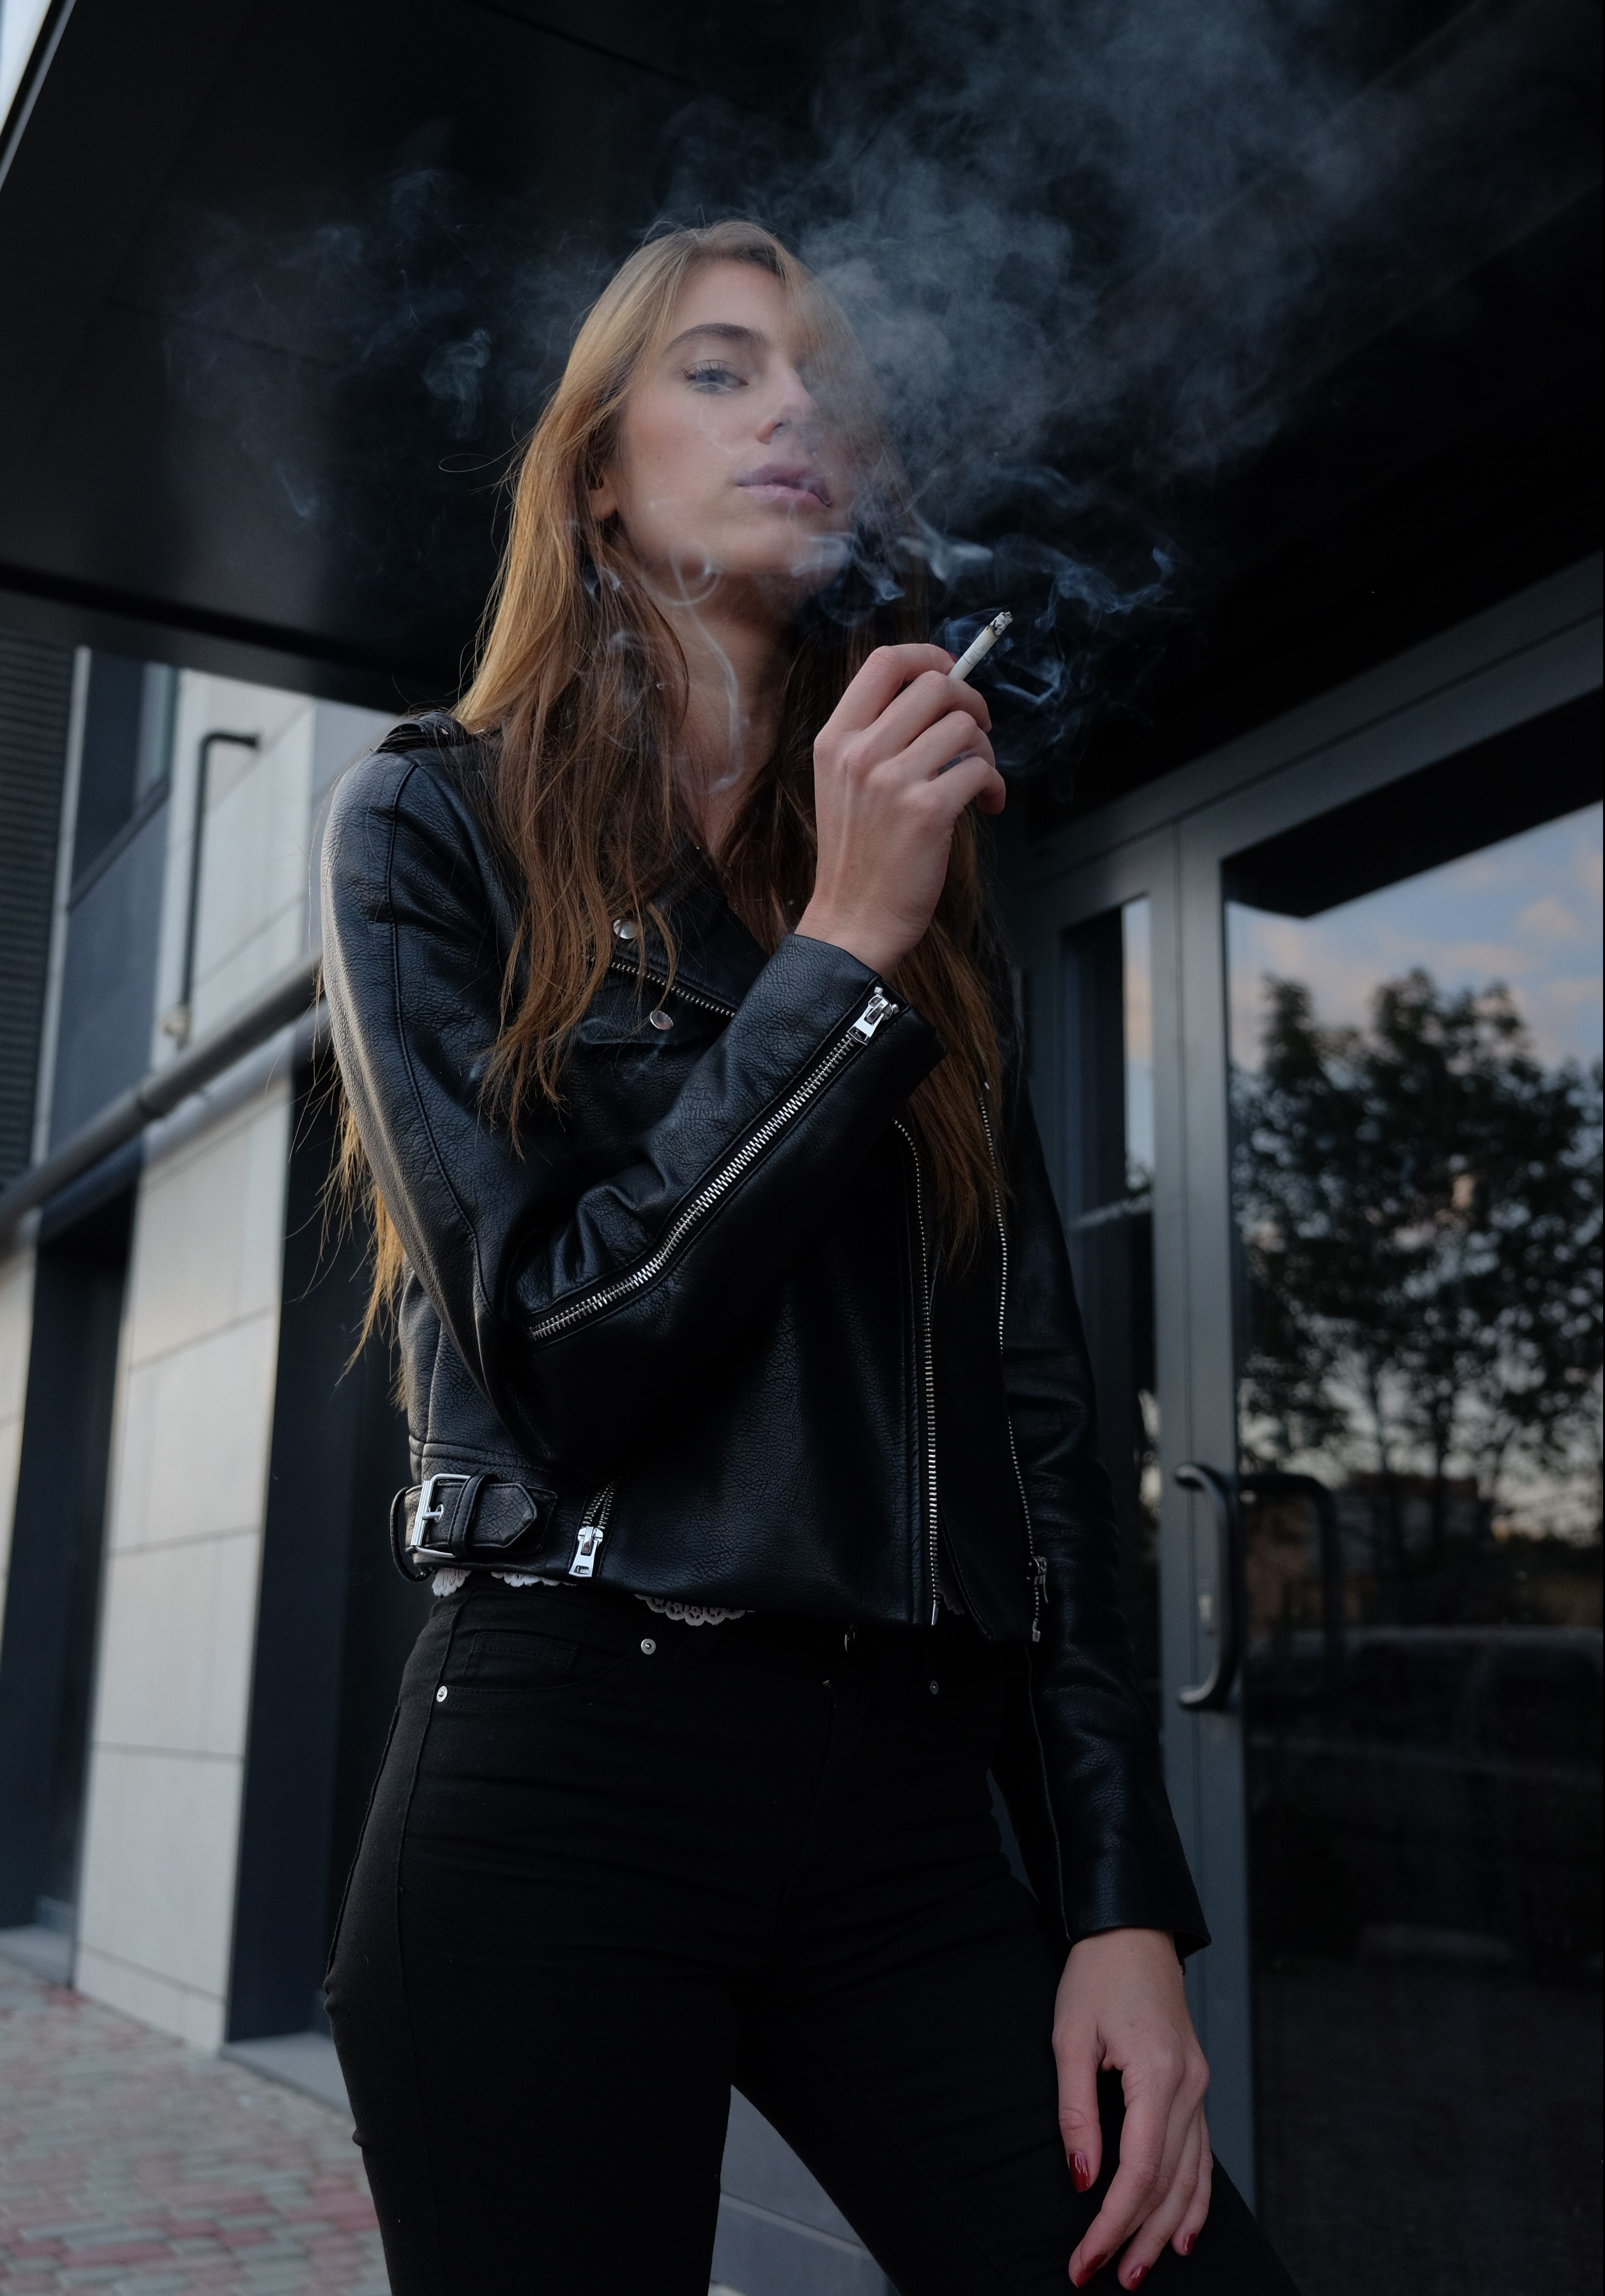 Woman wearing leather jacket smoking a cigarette.